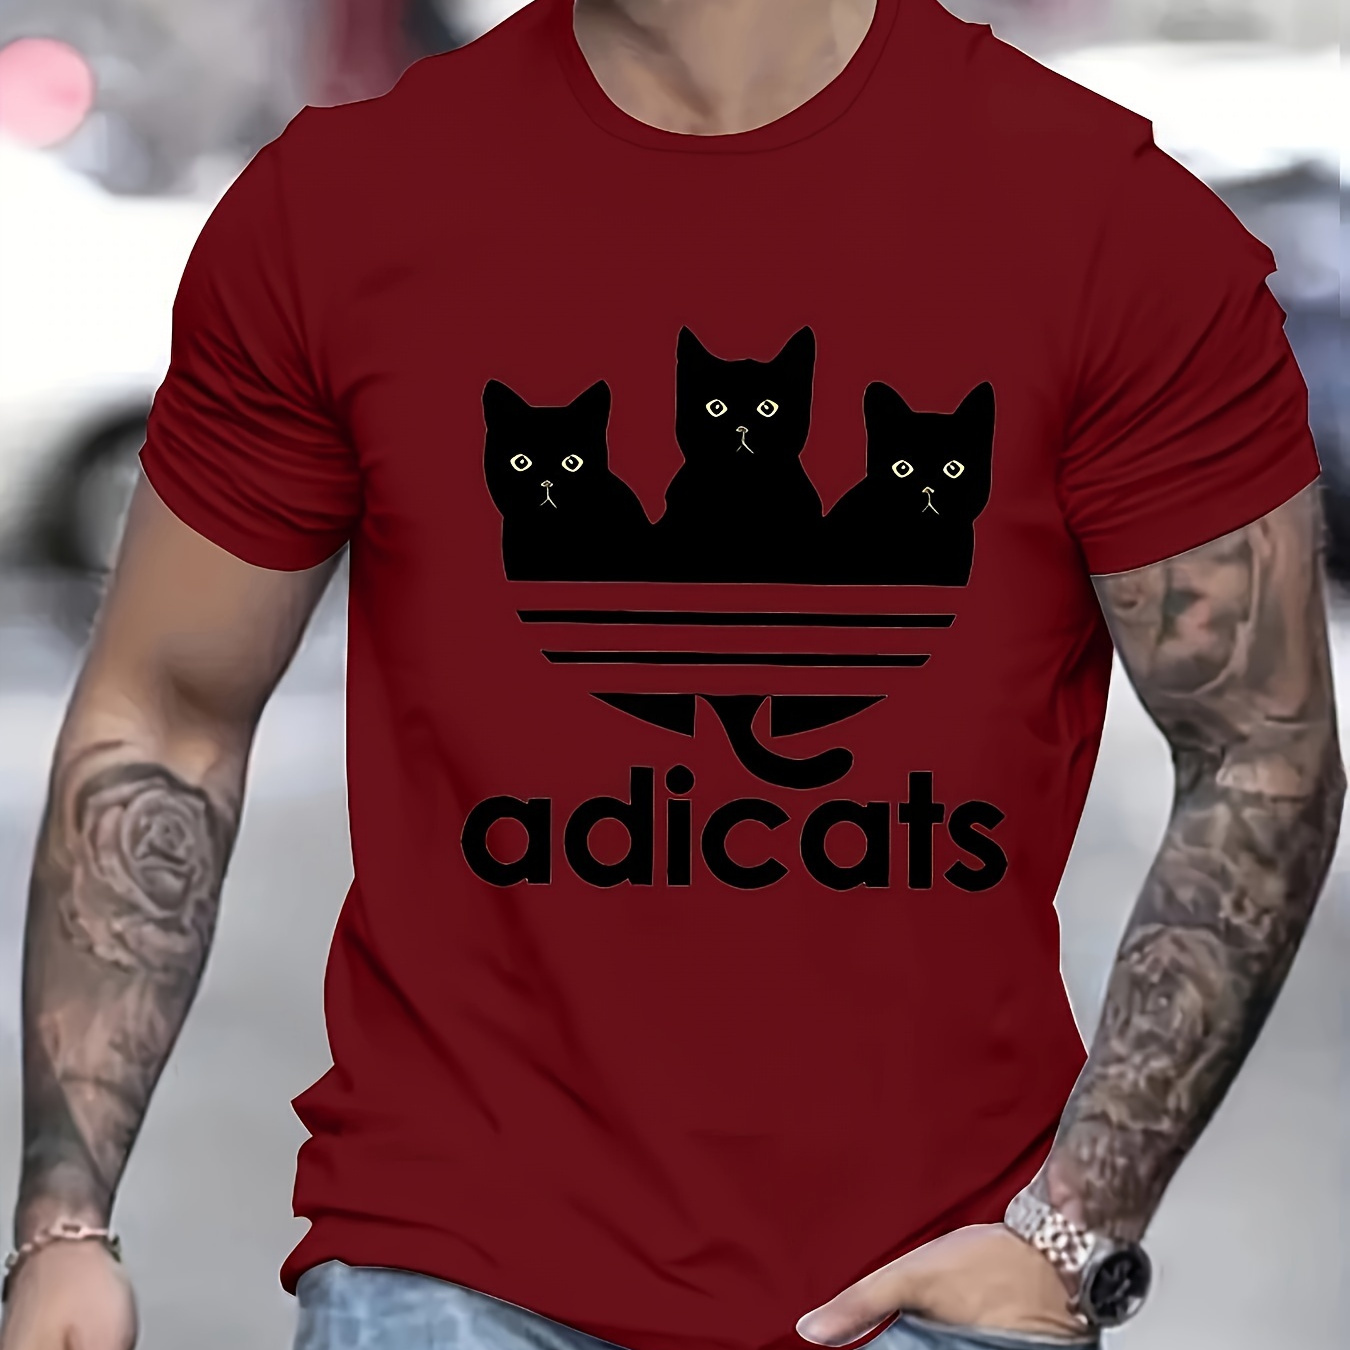 

Cute Cat & Letter Print Men's T-shirt, Casual Versatile Short Sleeve Crew Neck Tee Top, Men's Summer Clothing